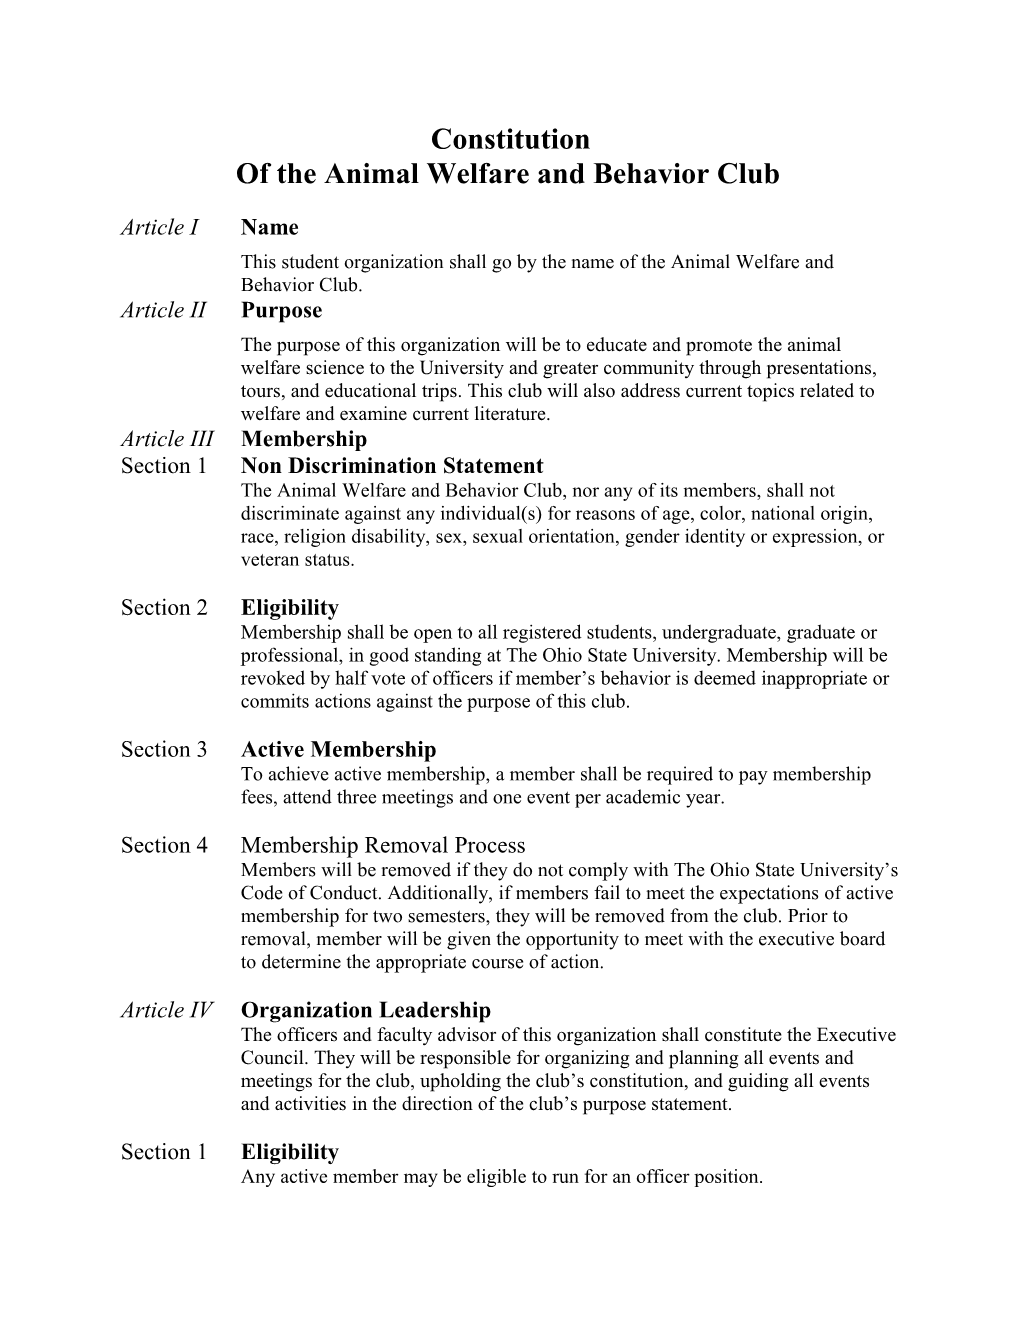 Of the Animal Welfare and Behavior Club